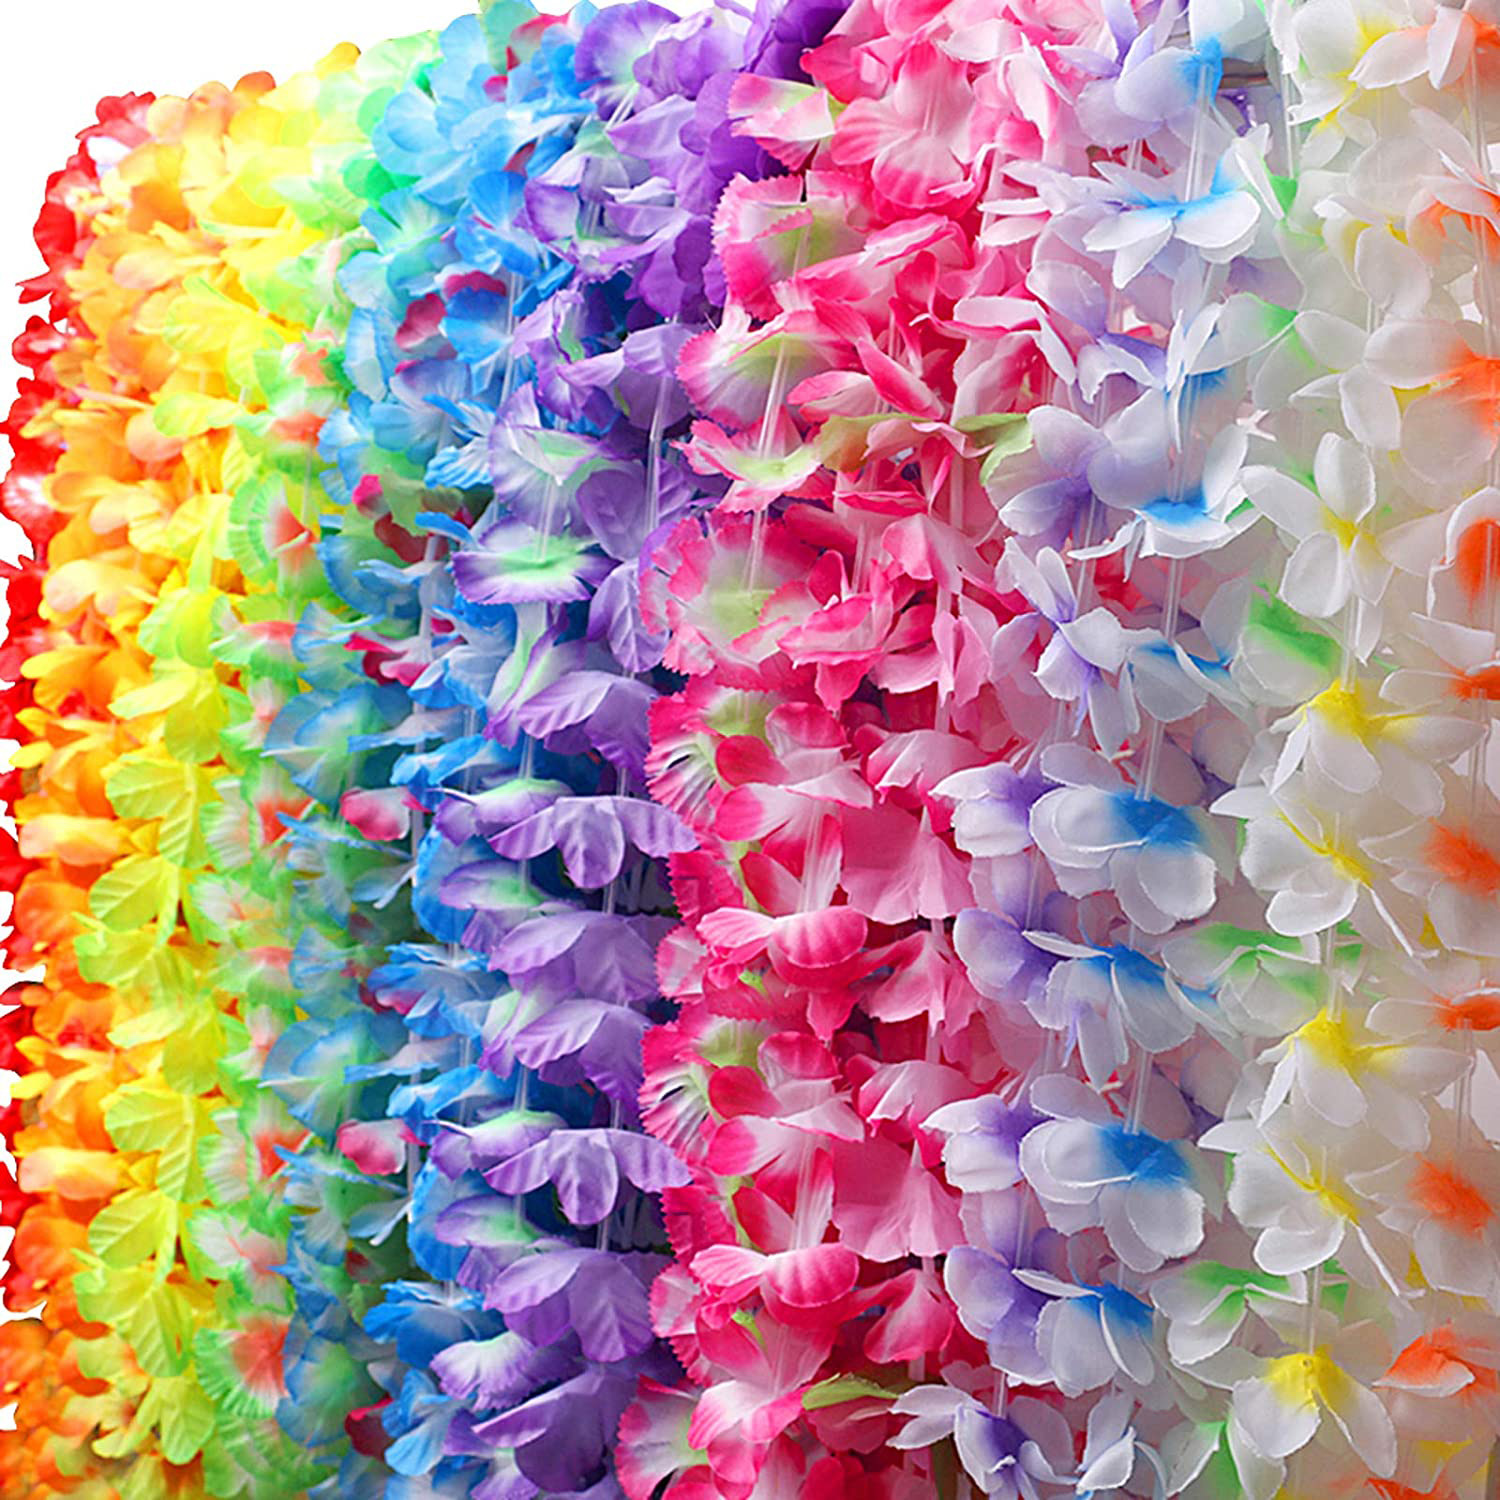 Hawaiian Leis Necklace Favors Wreaths Headbands, Holiday Wedding Beach Birthday Decorations